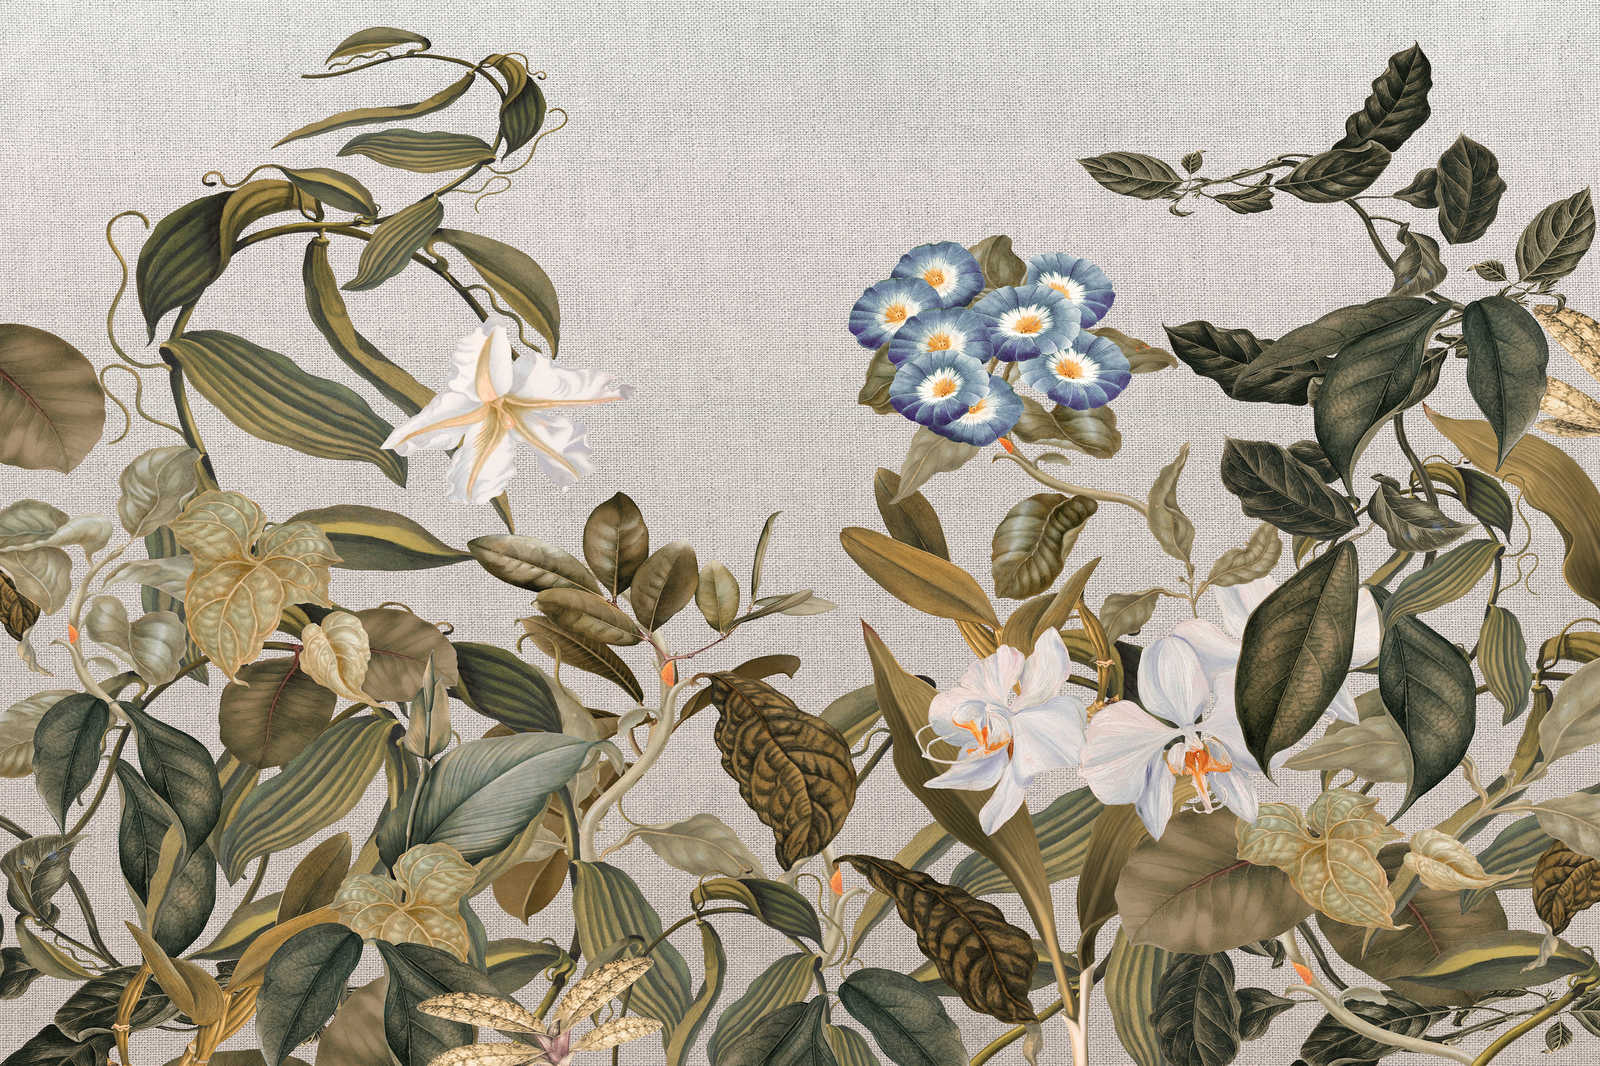             Leinwandbild Botanical Stil Blüten, Blättern & Textil-Look – 1,20 m x 0,80 m
        